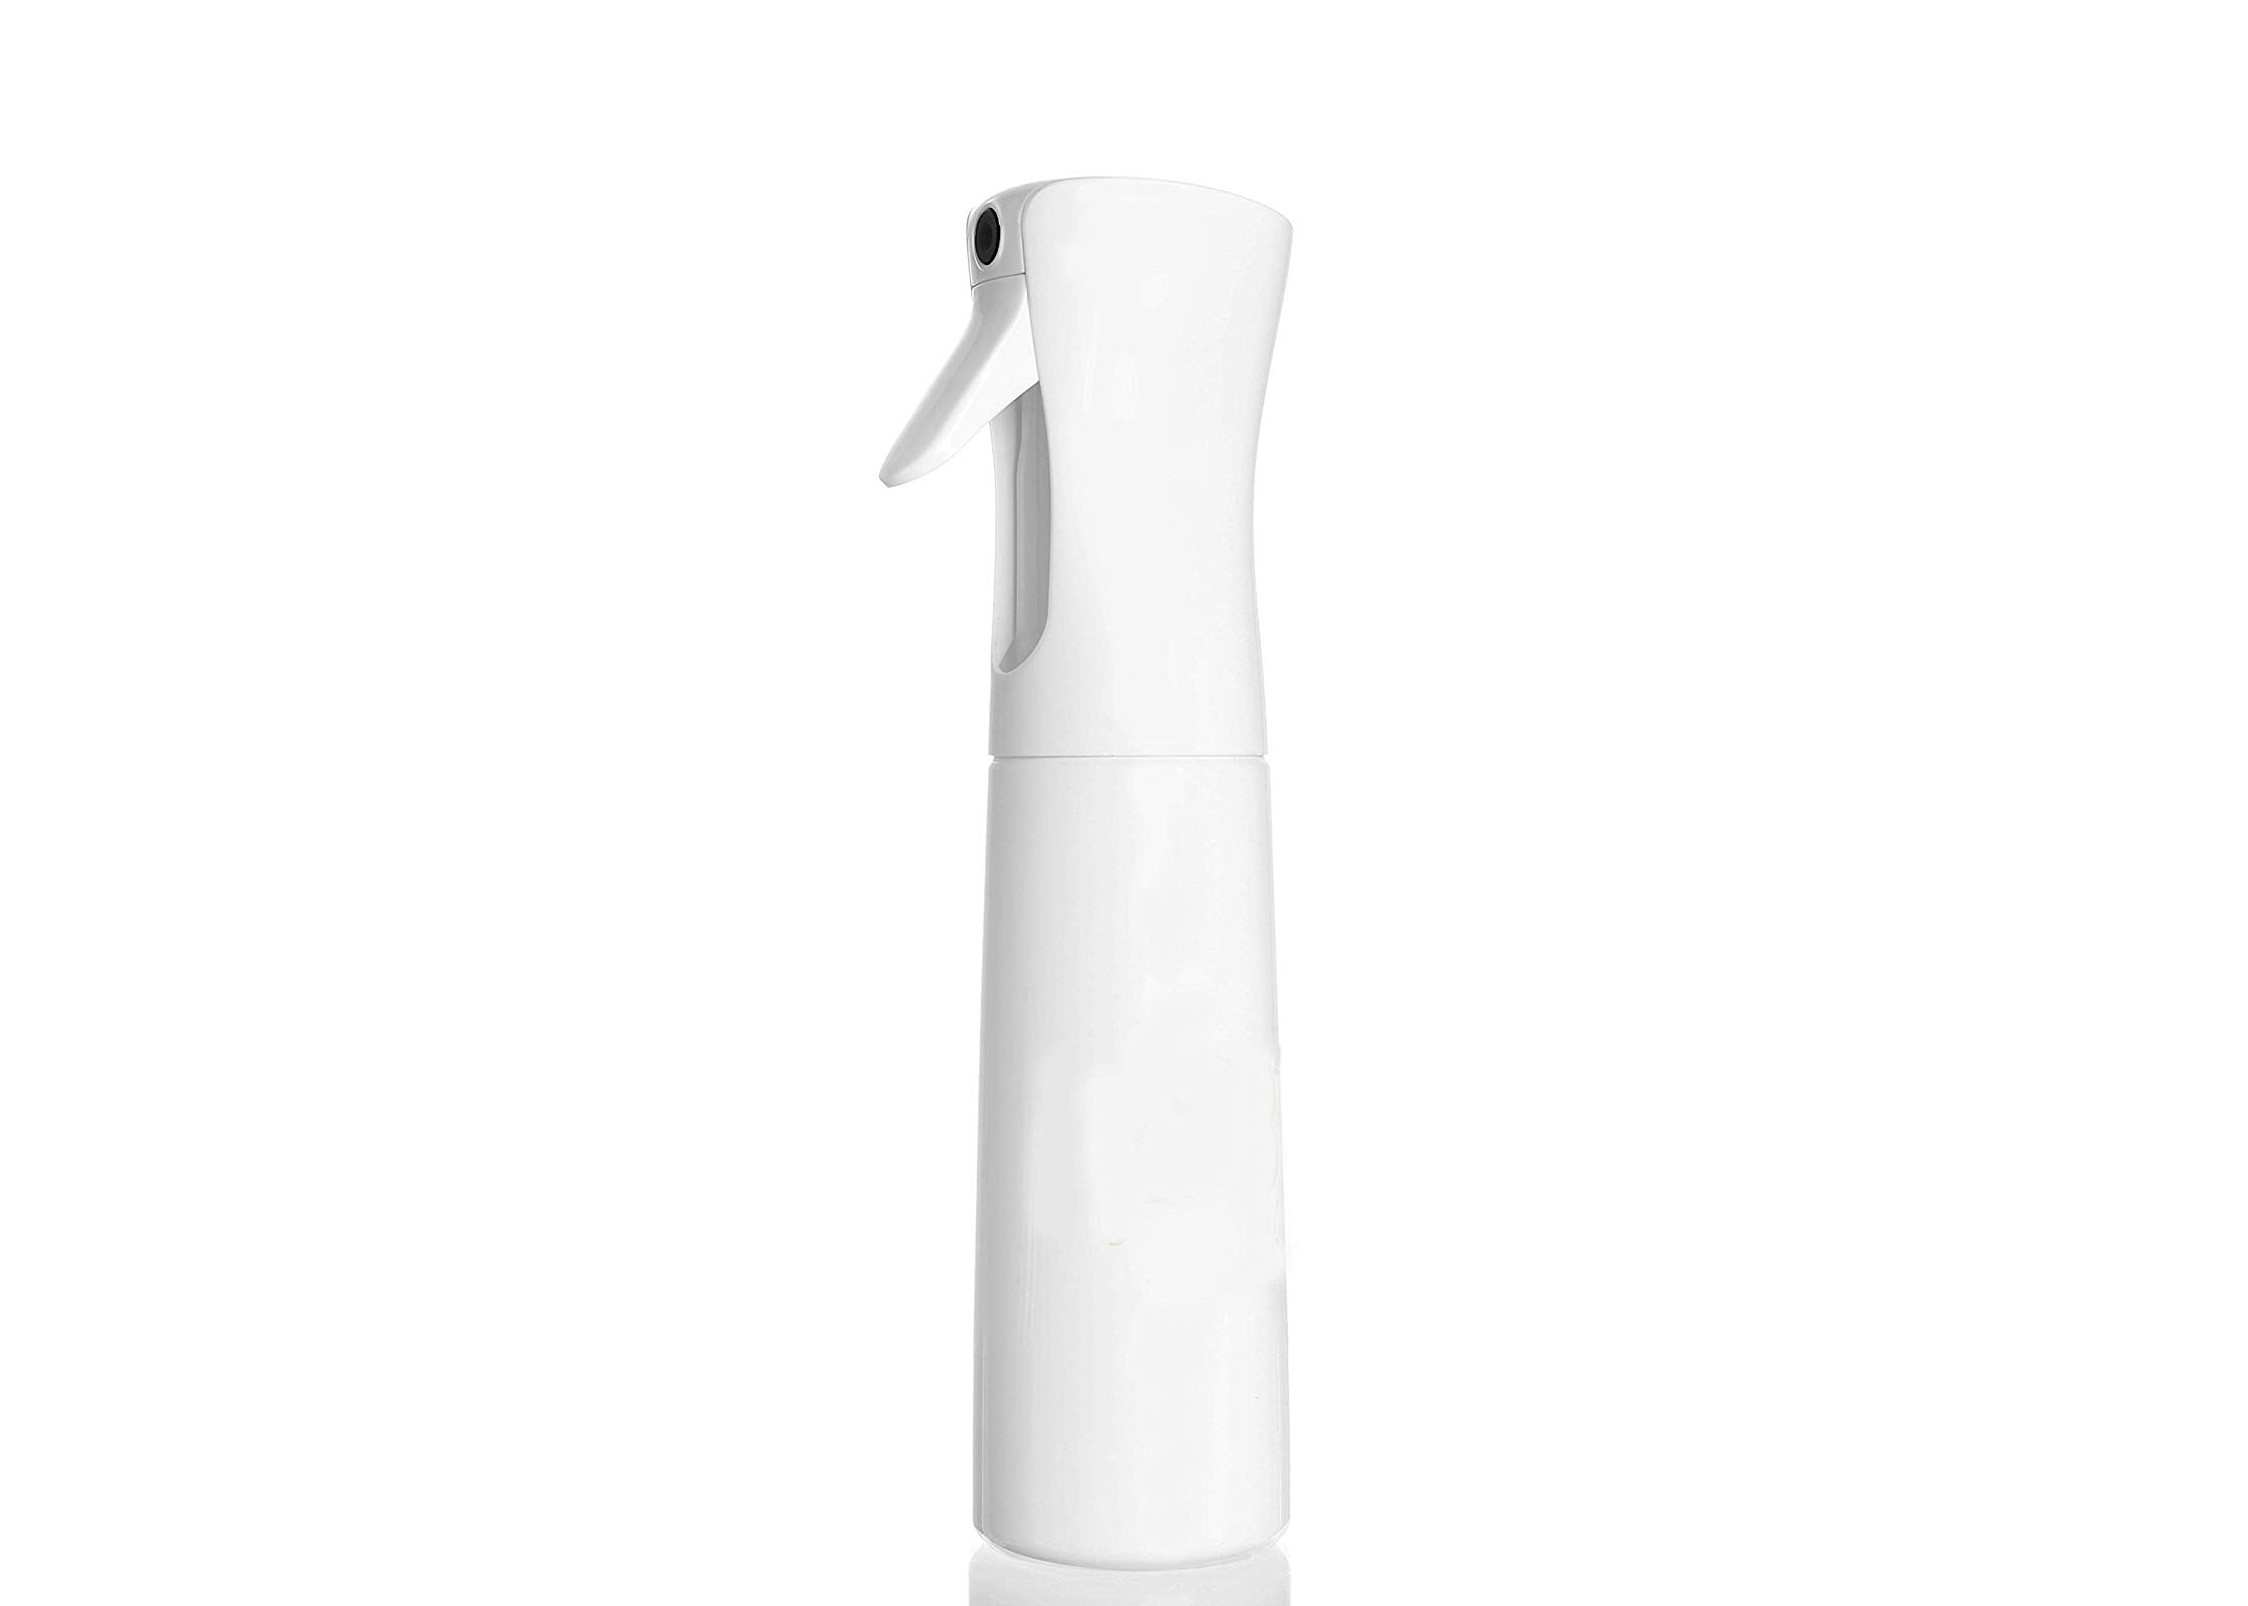 O pulverizador cosmético branco engarrafa a mão pressiona o uso dos produtos de beleza da garrafa